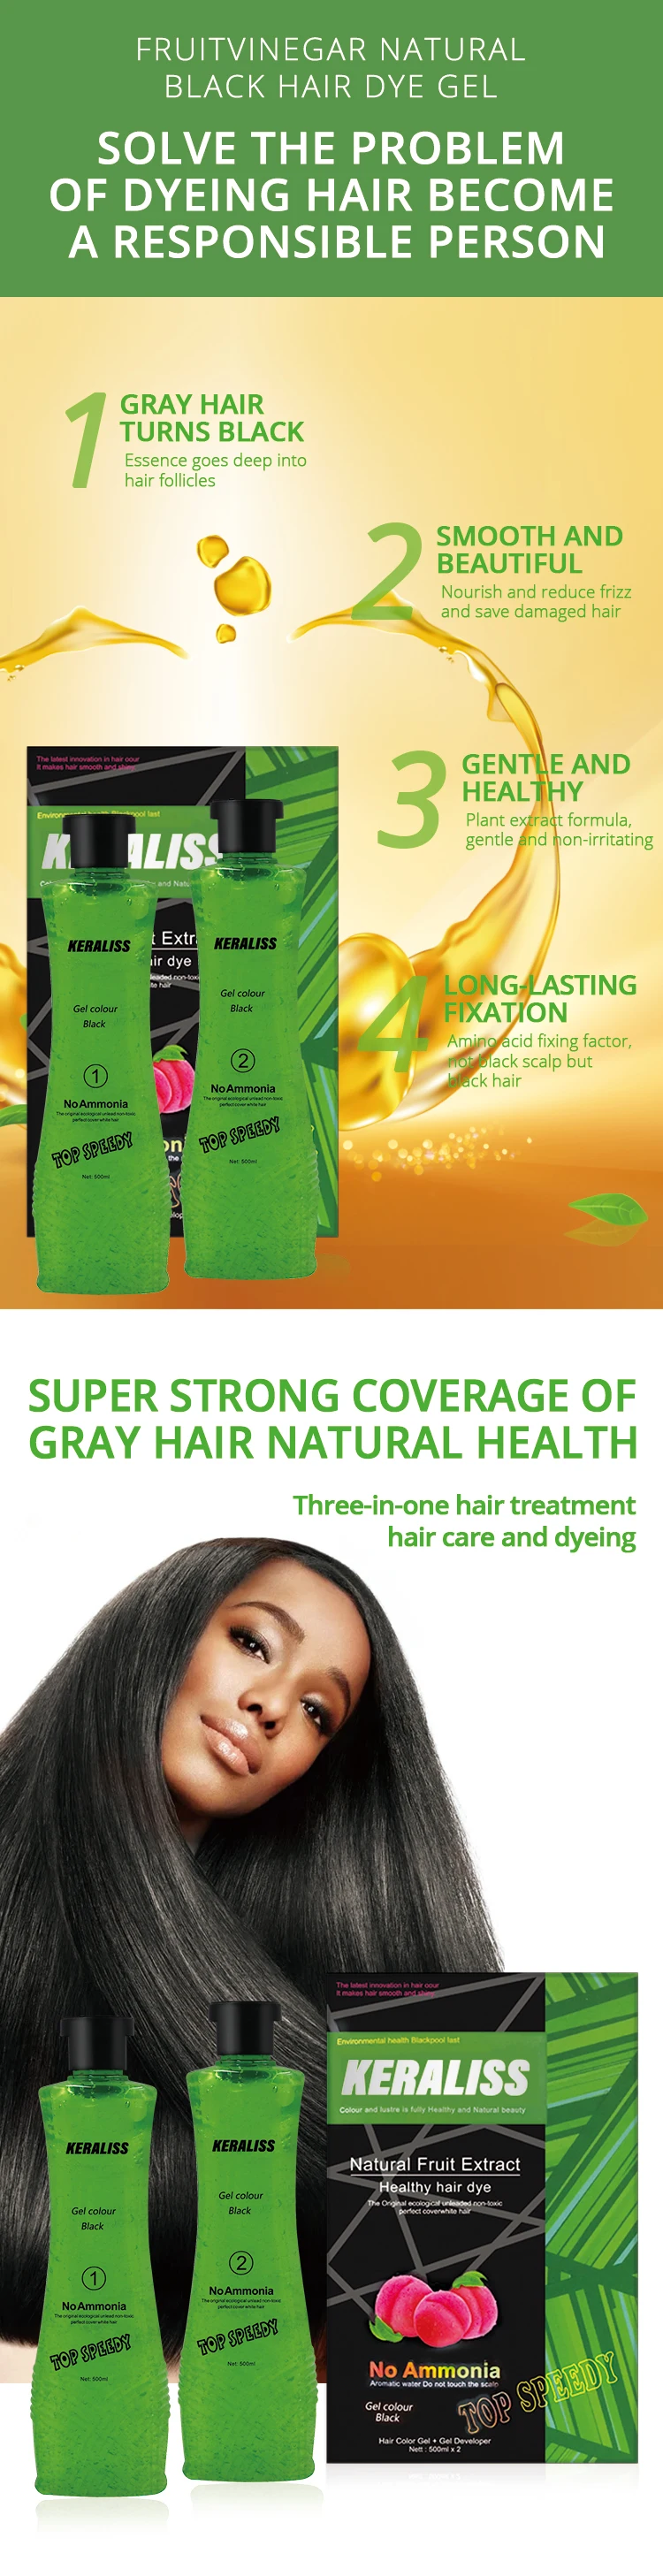 Green Herbs Natrual Fruit Extract Healthy Hair Dye 500mlx2 - Buy Green Herbs,Natural  Black Hair Dyes,Green Herbs Hair Dye Product on 